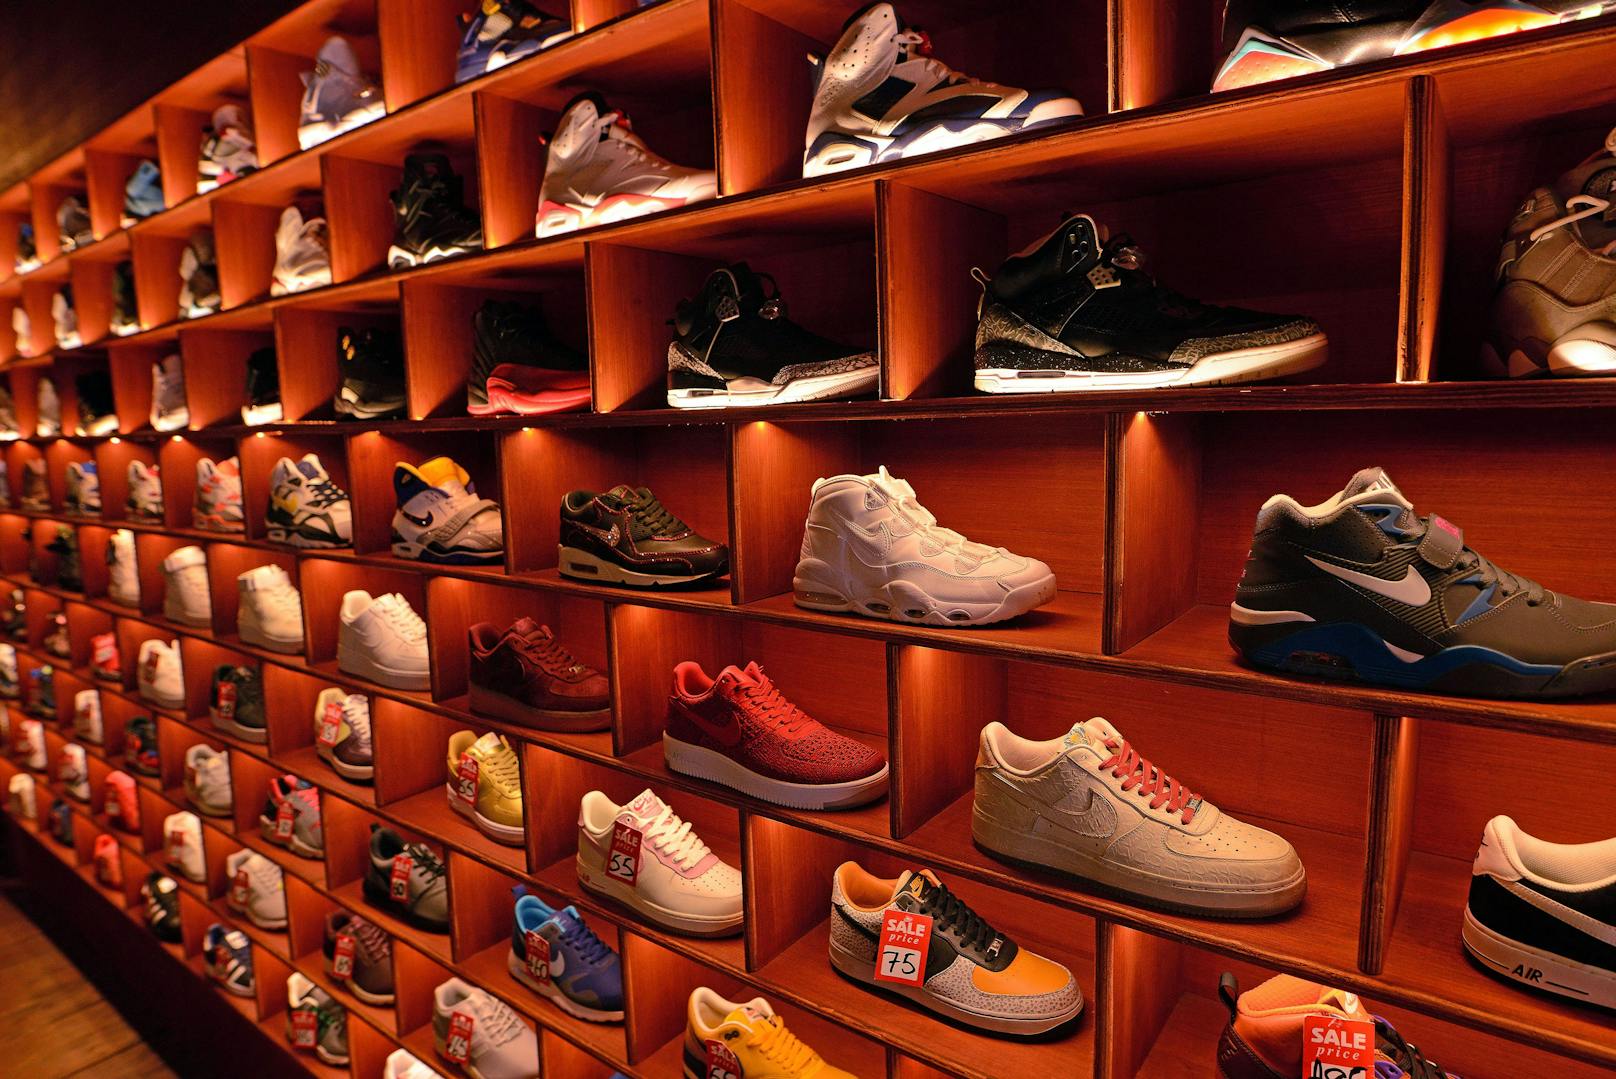 Nike schreddert im Rahmen des Recyclingprogramms neue Schuhe. (Symbolbild)&nbsp;